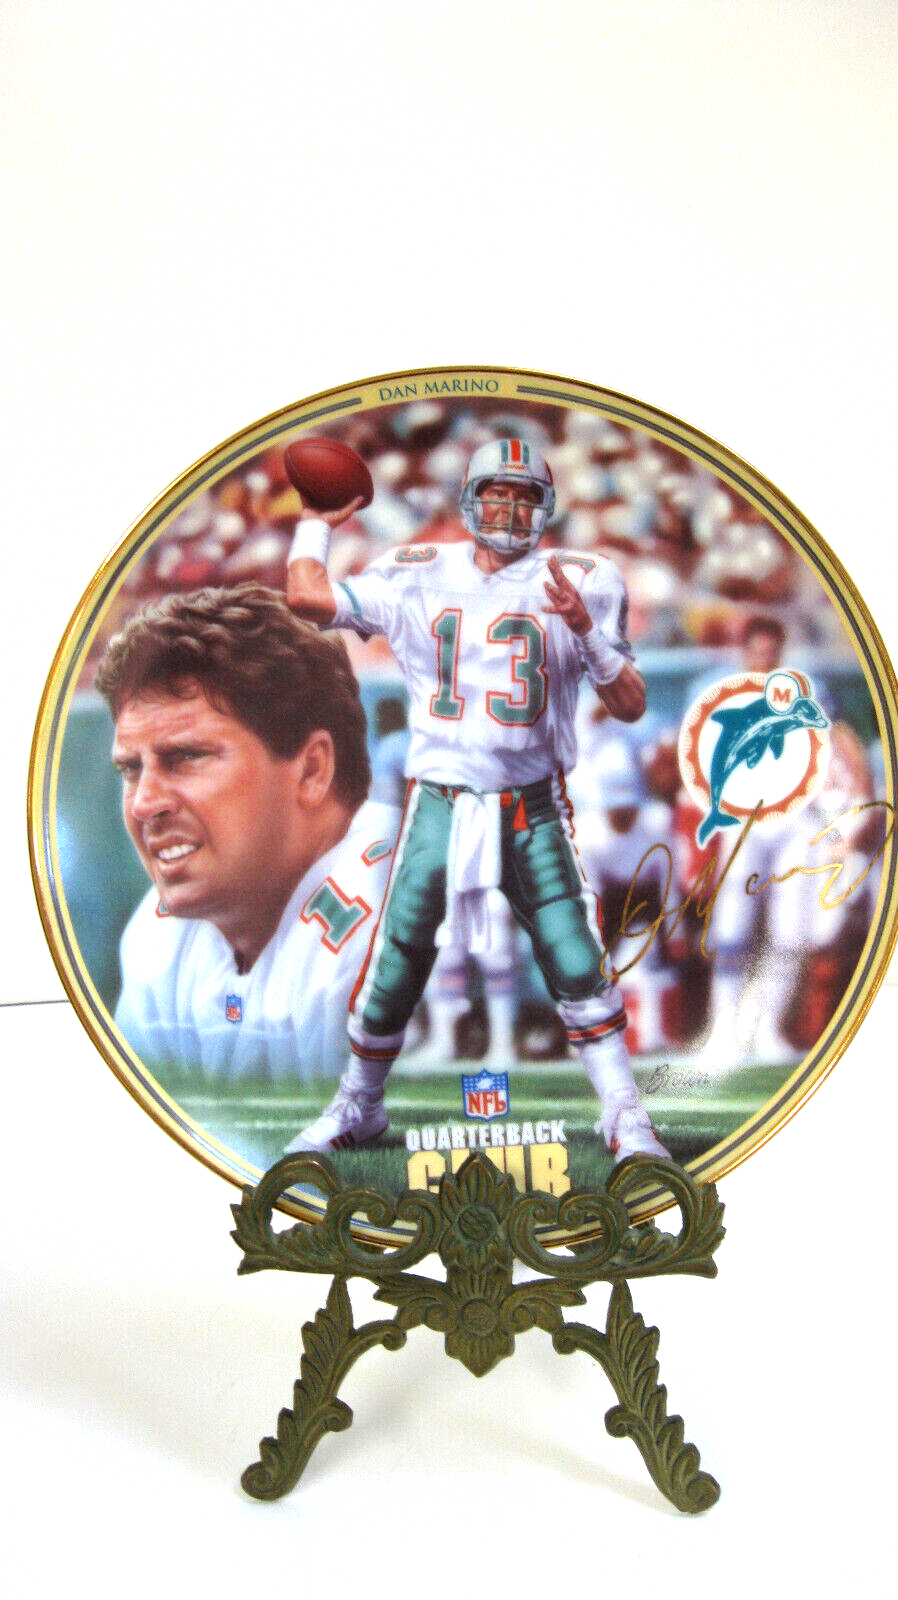 Primary image for 1996 Dan Marino Miami Dolphins NFL Quarterback Club Bradford  Plate with COA